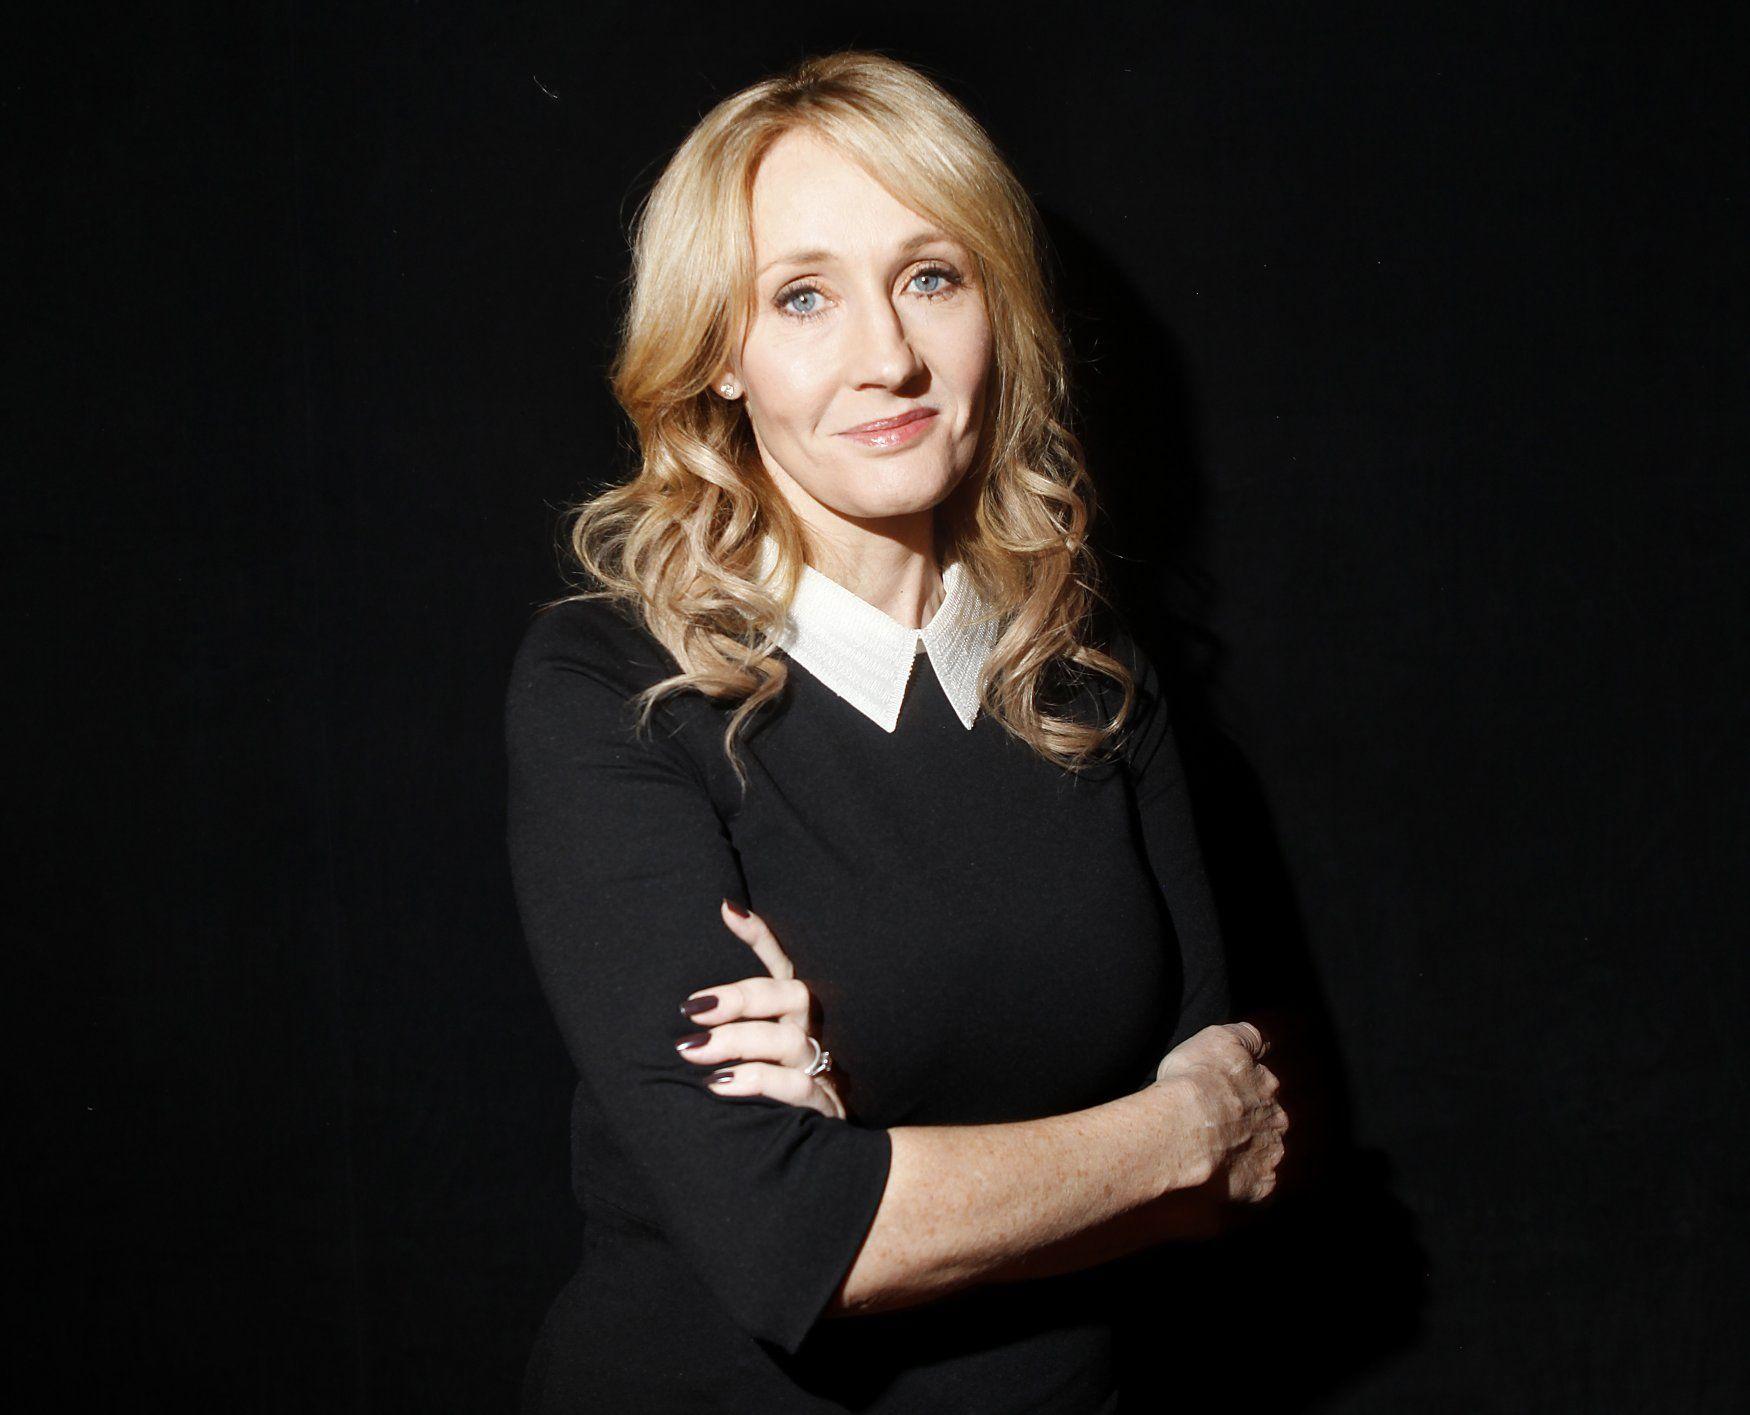 HD J.K Rowling Wallpaper and Photo. HD Celebrities Wallpaper